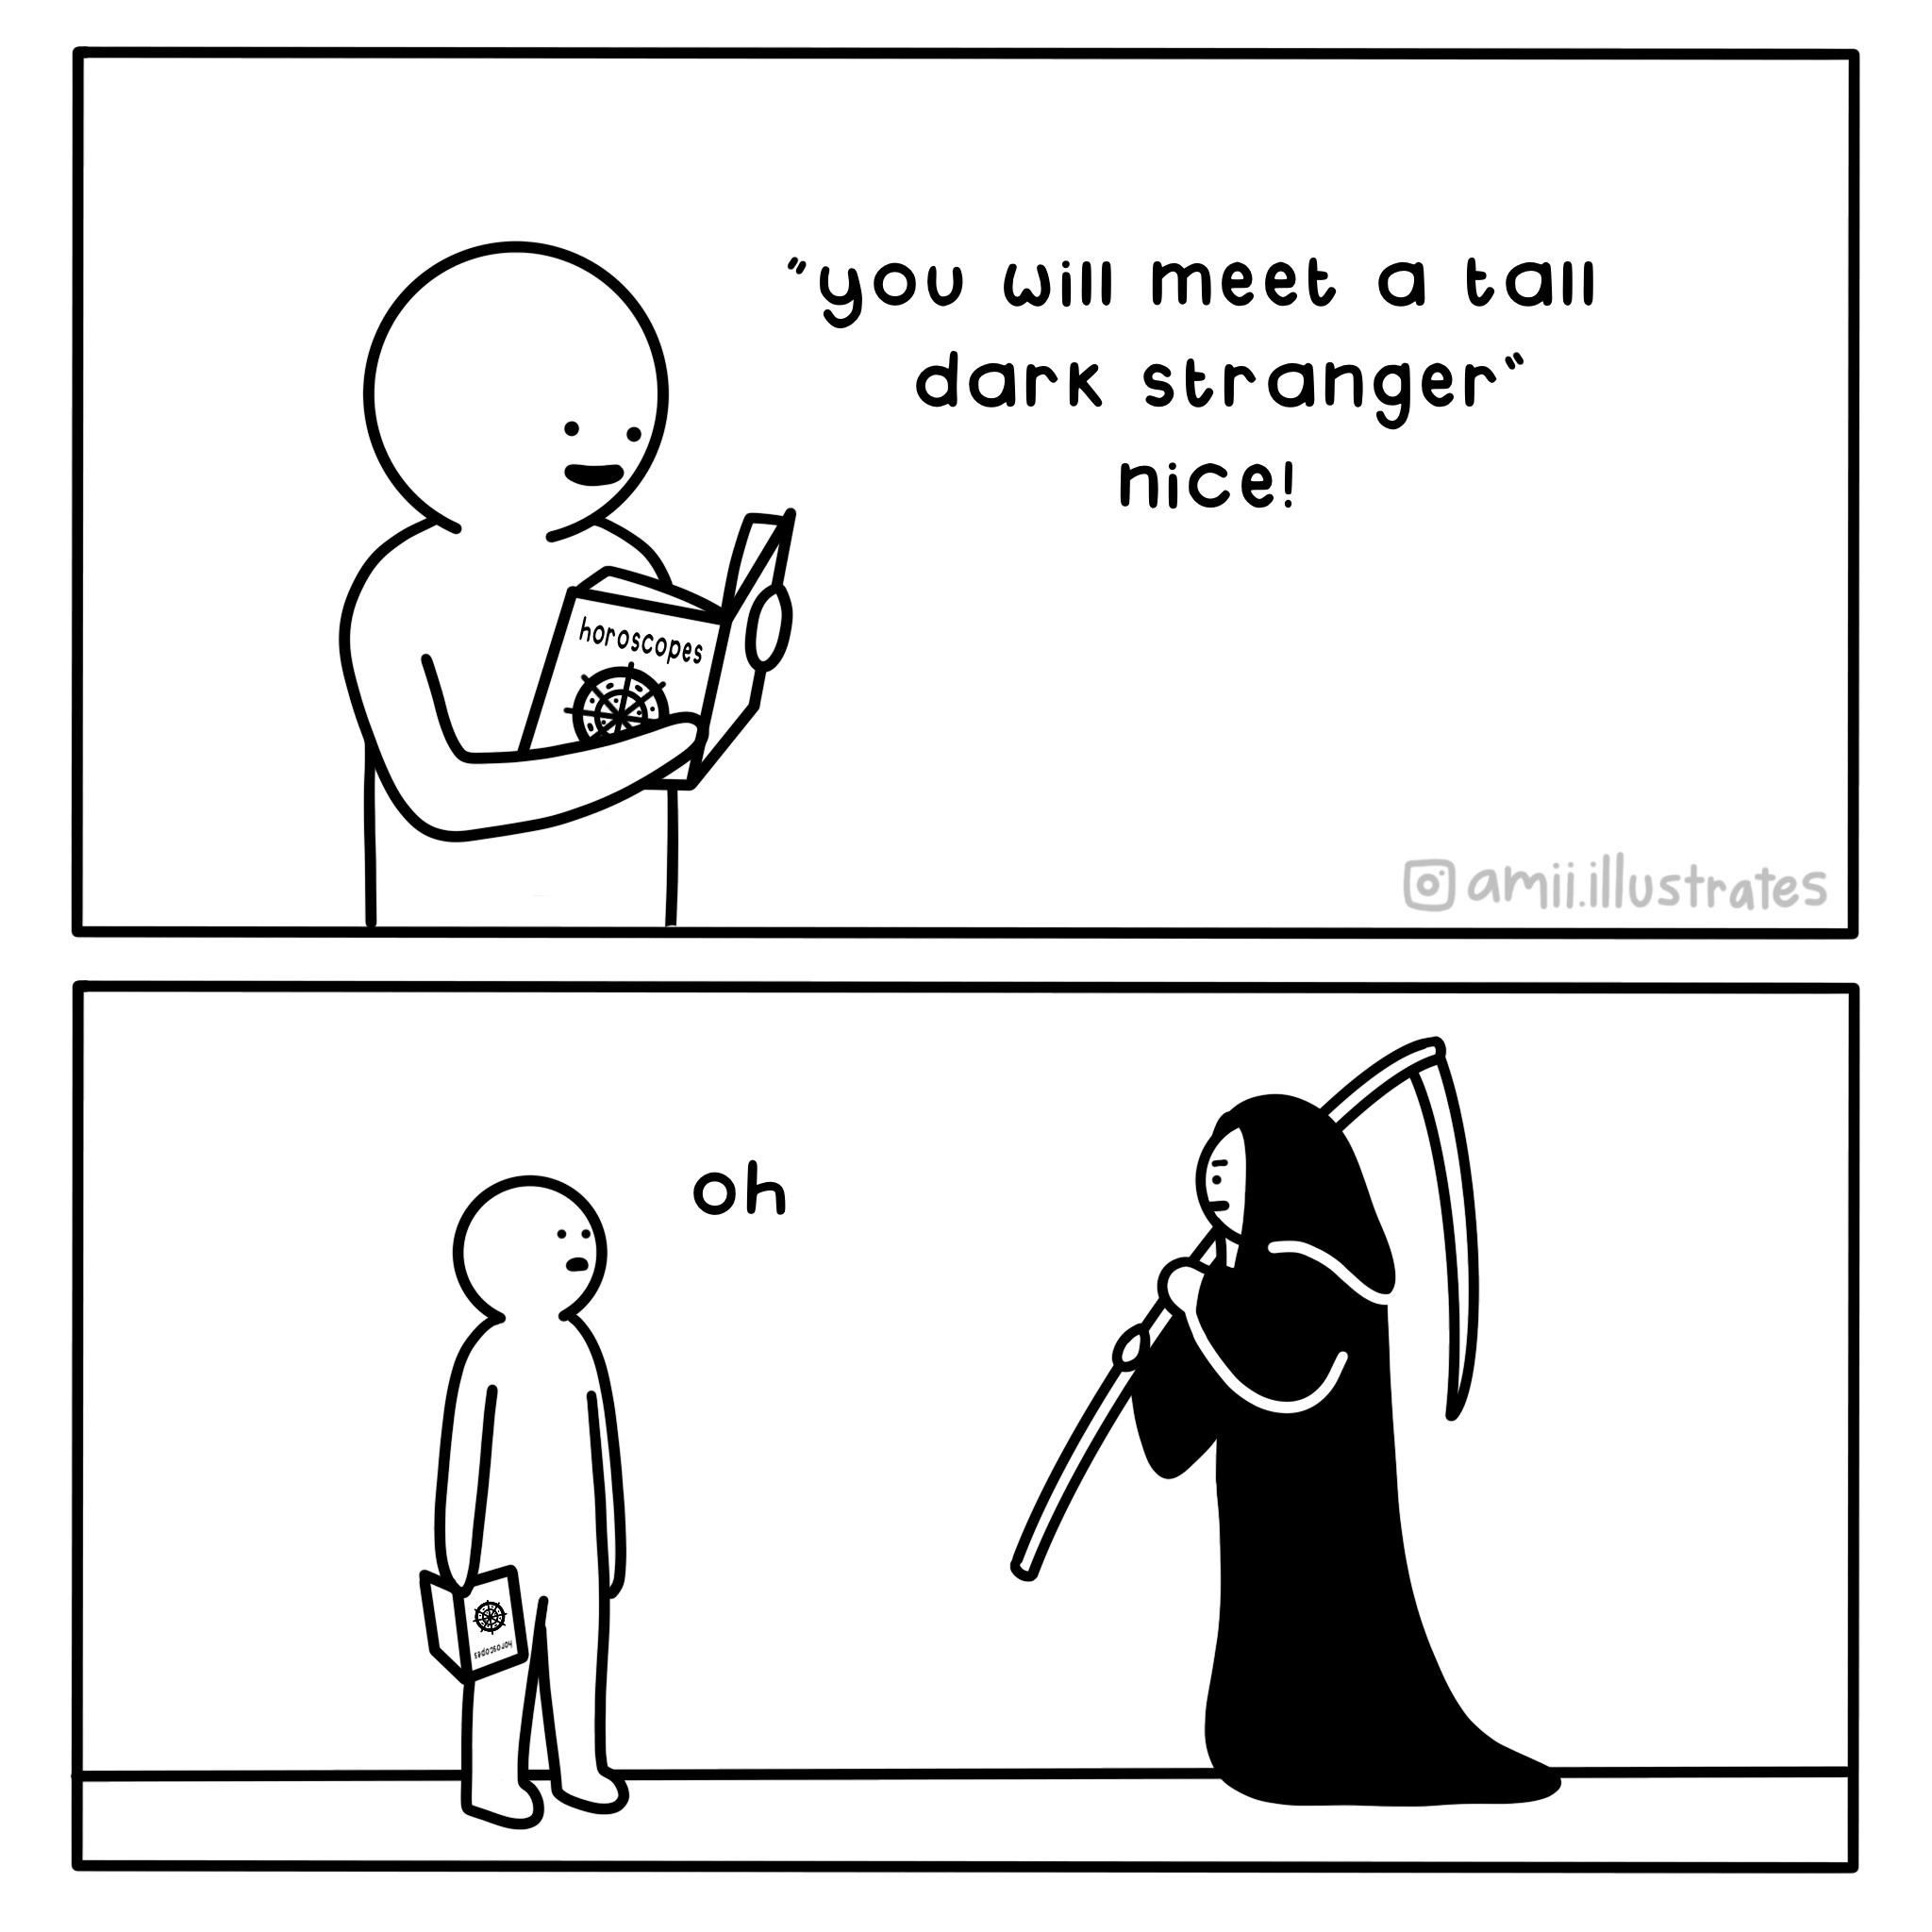 Tall Dark Stranger